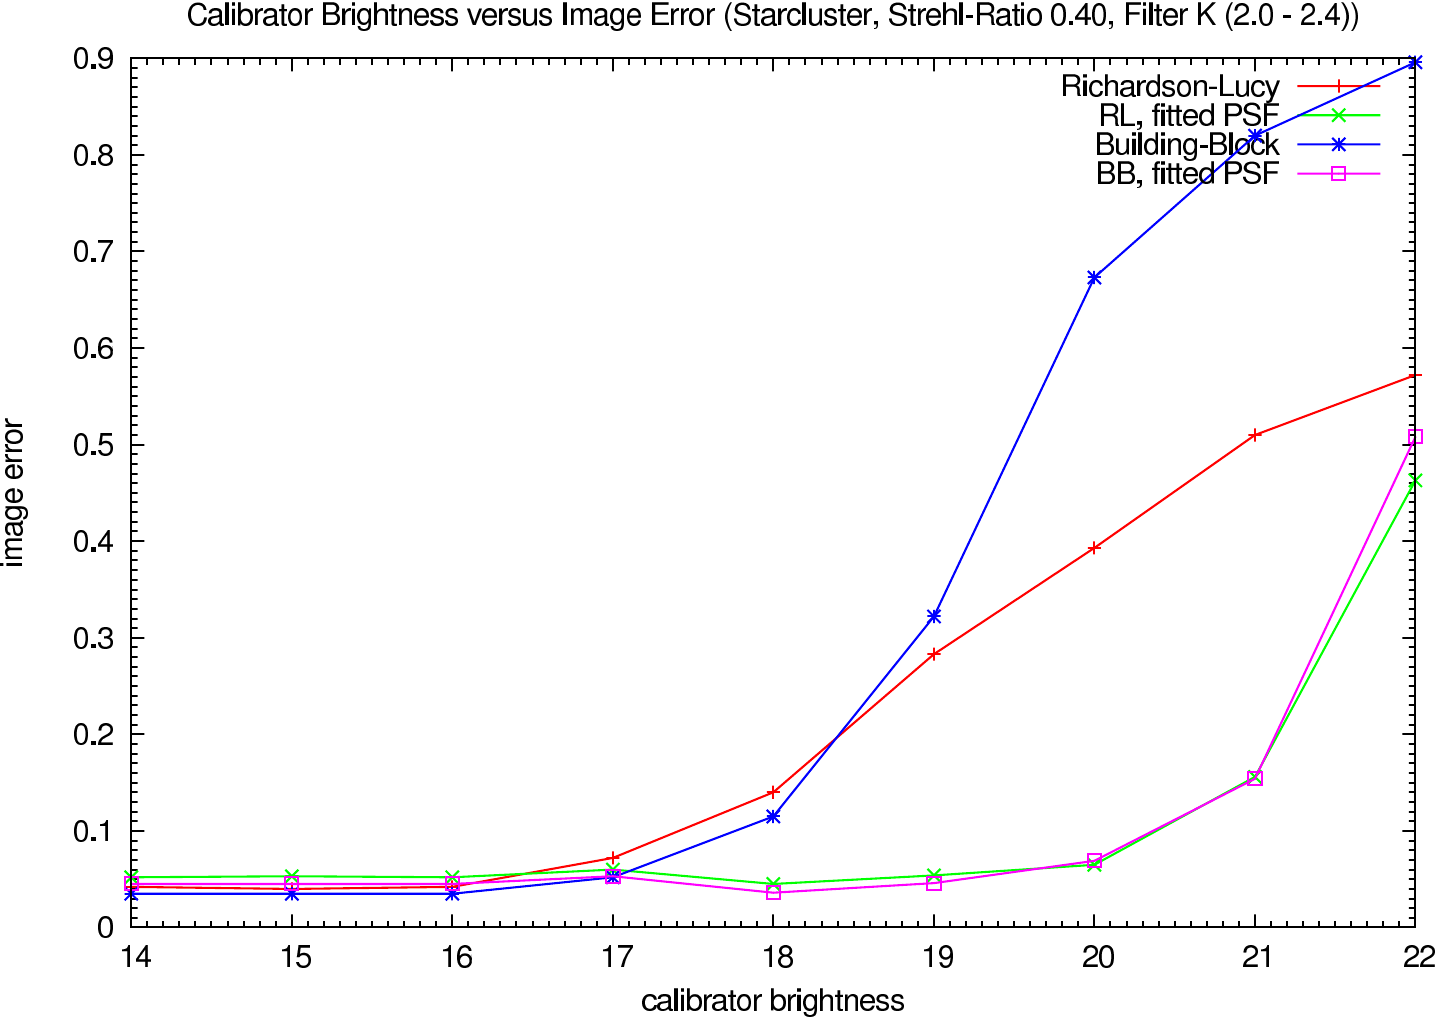 Image errors depending on the calibrator brightness, strehl ratio 0.40, K-Band